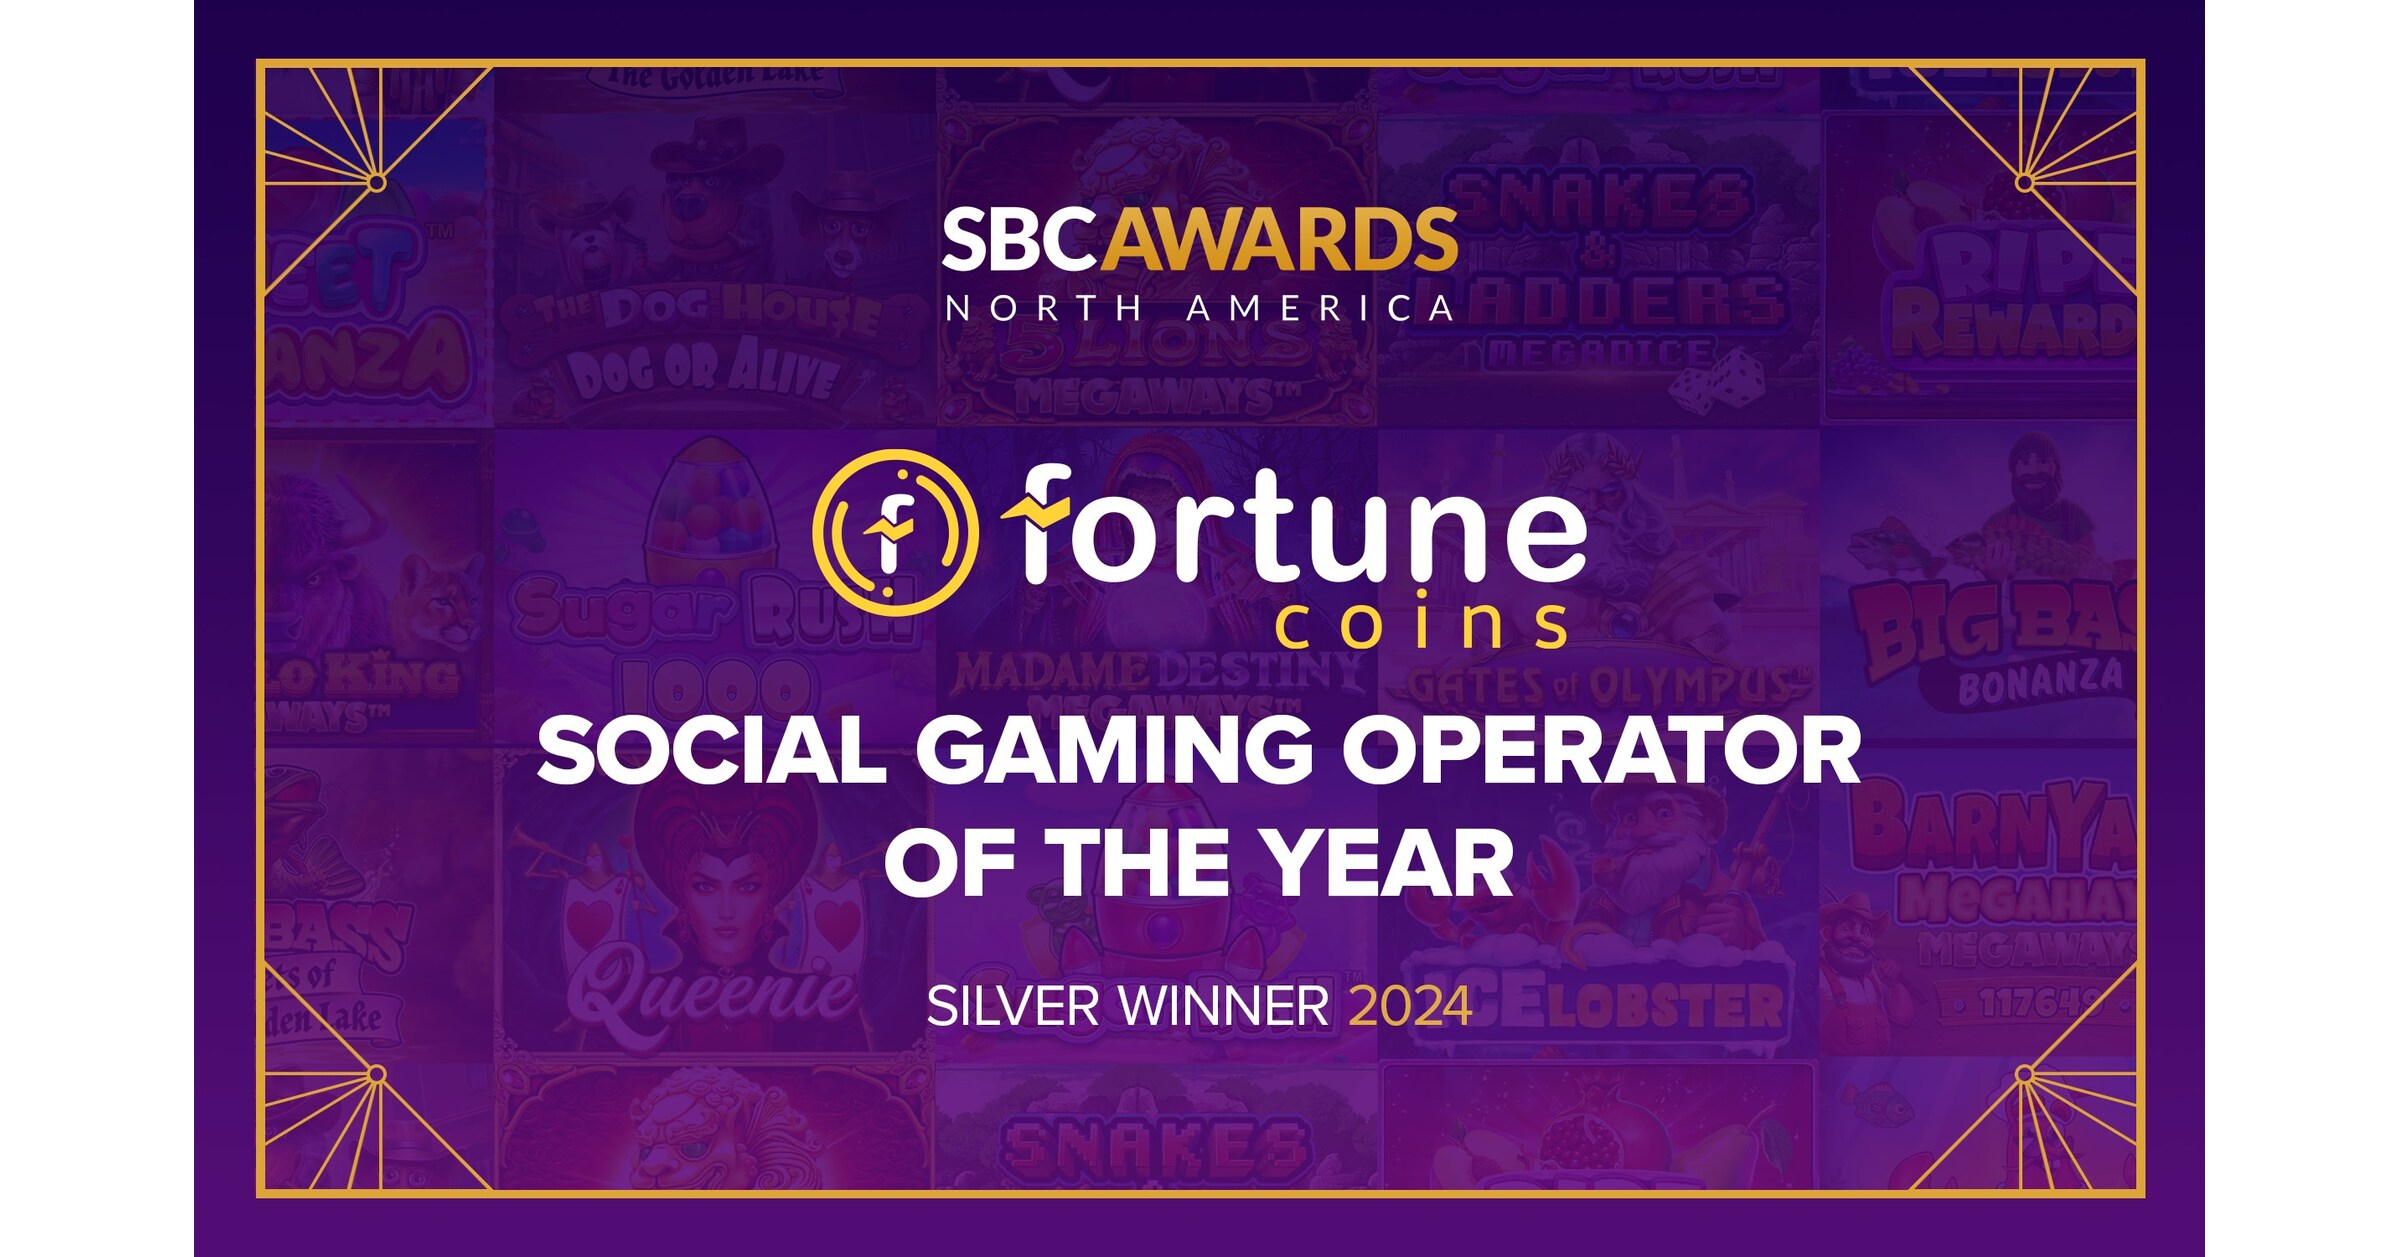 Fortunecoins.com获得了2024年SBC北美奖年度社交游戏运营商的亚军